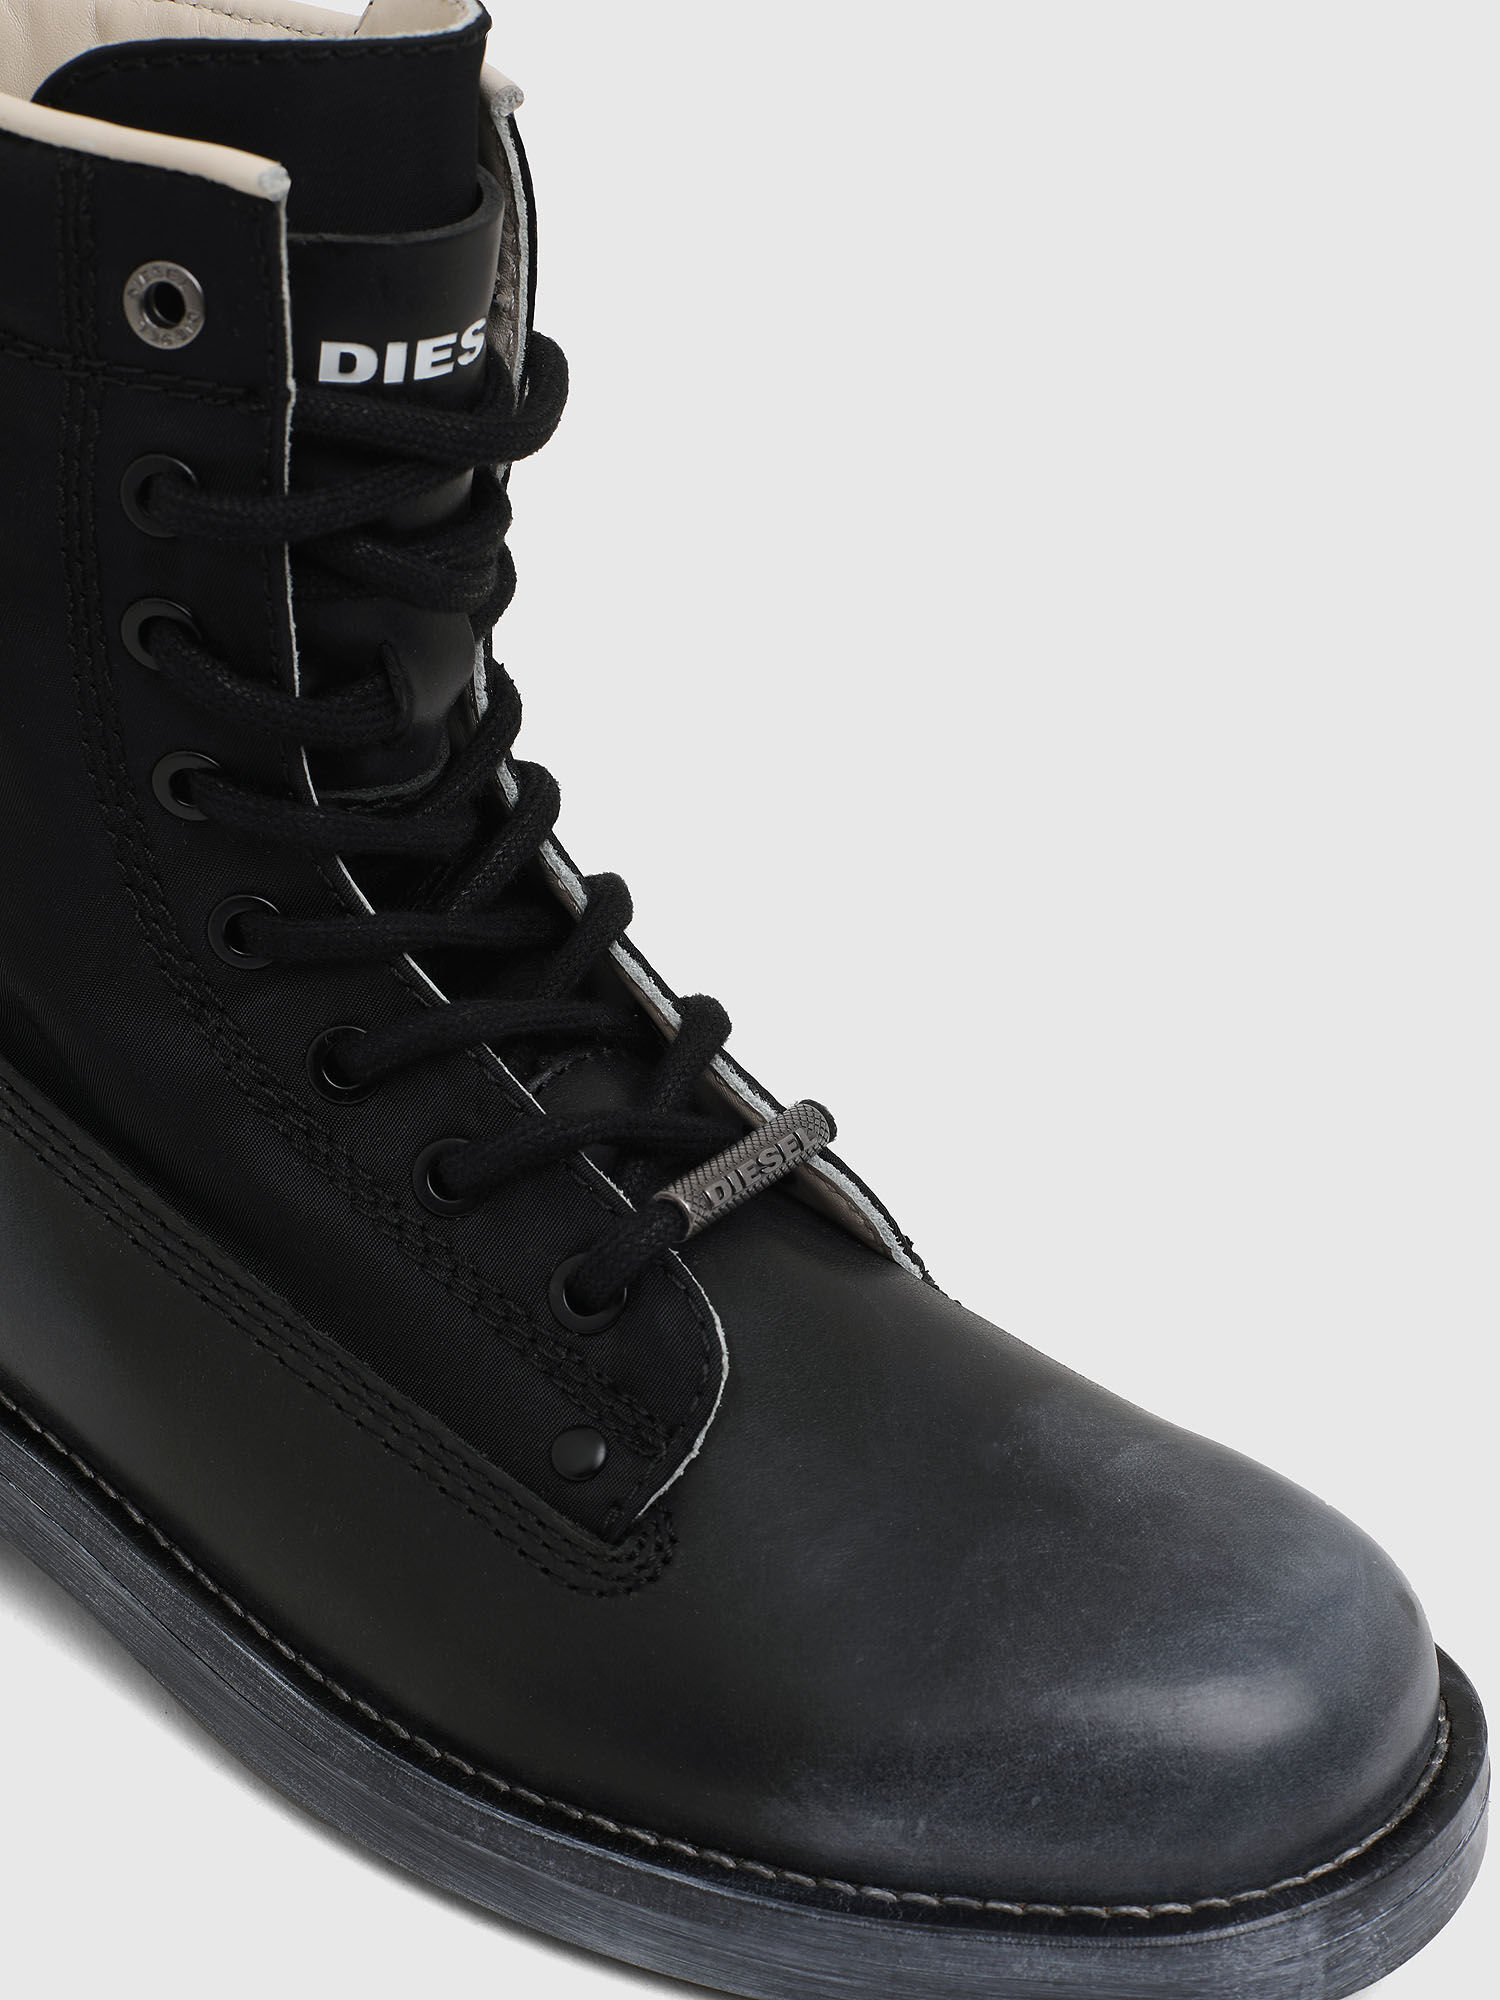 diesel combat boots